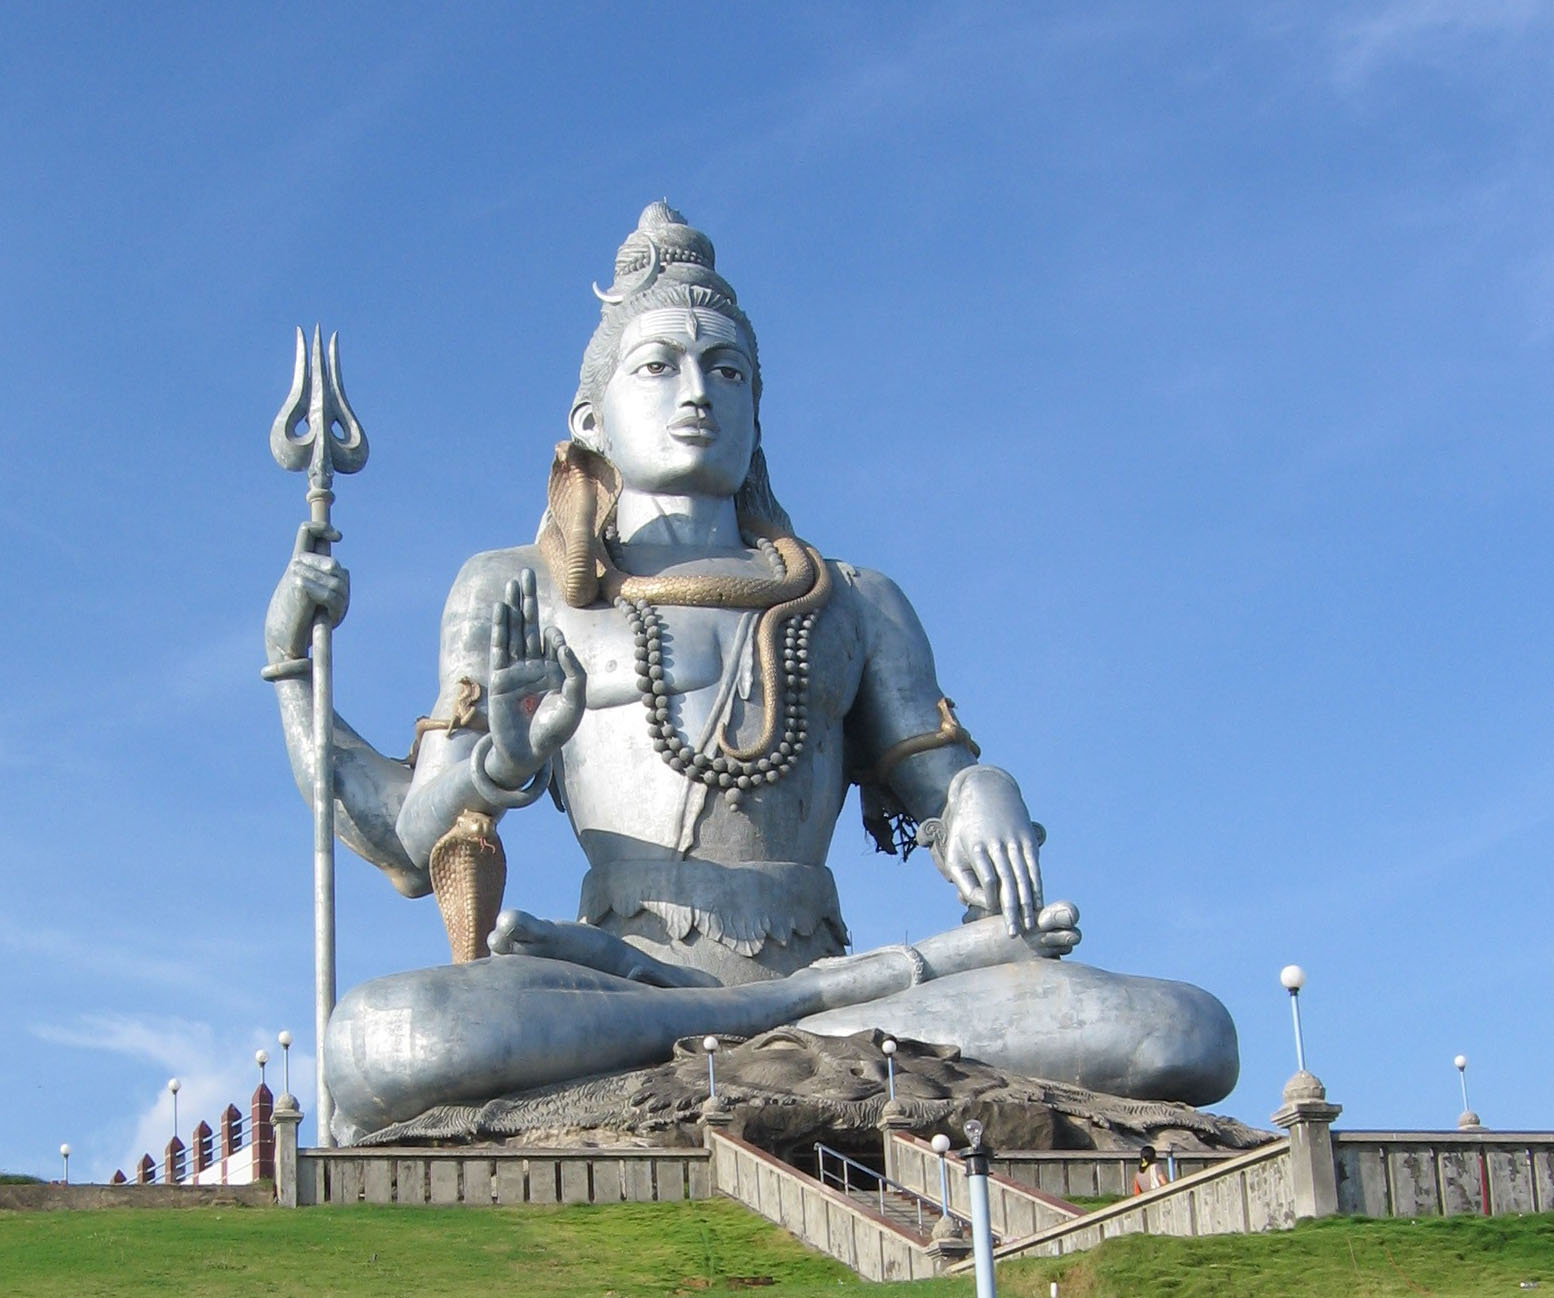 Lord Shiva Statue 85 ft